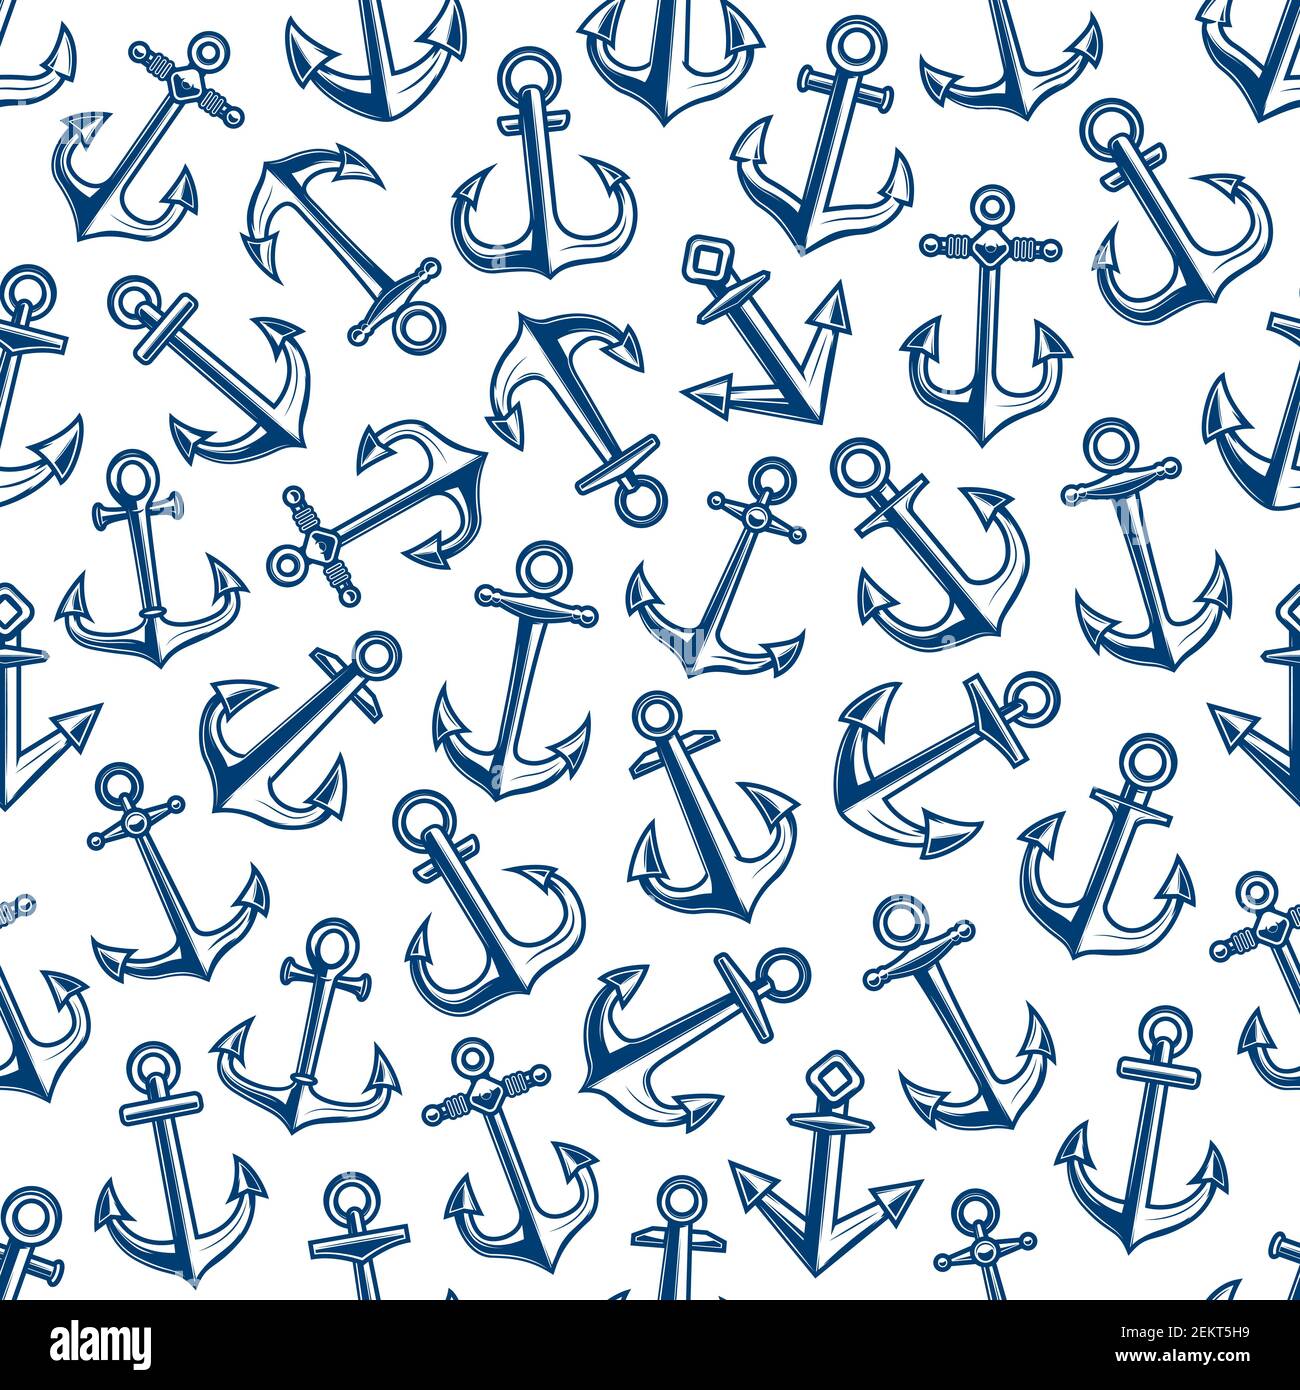 Anchor seamless pattern, marine adventure and sailor ship nautical